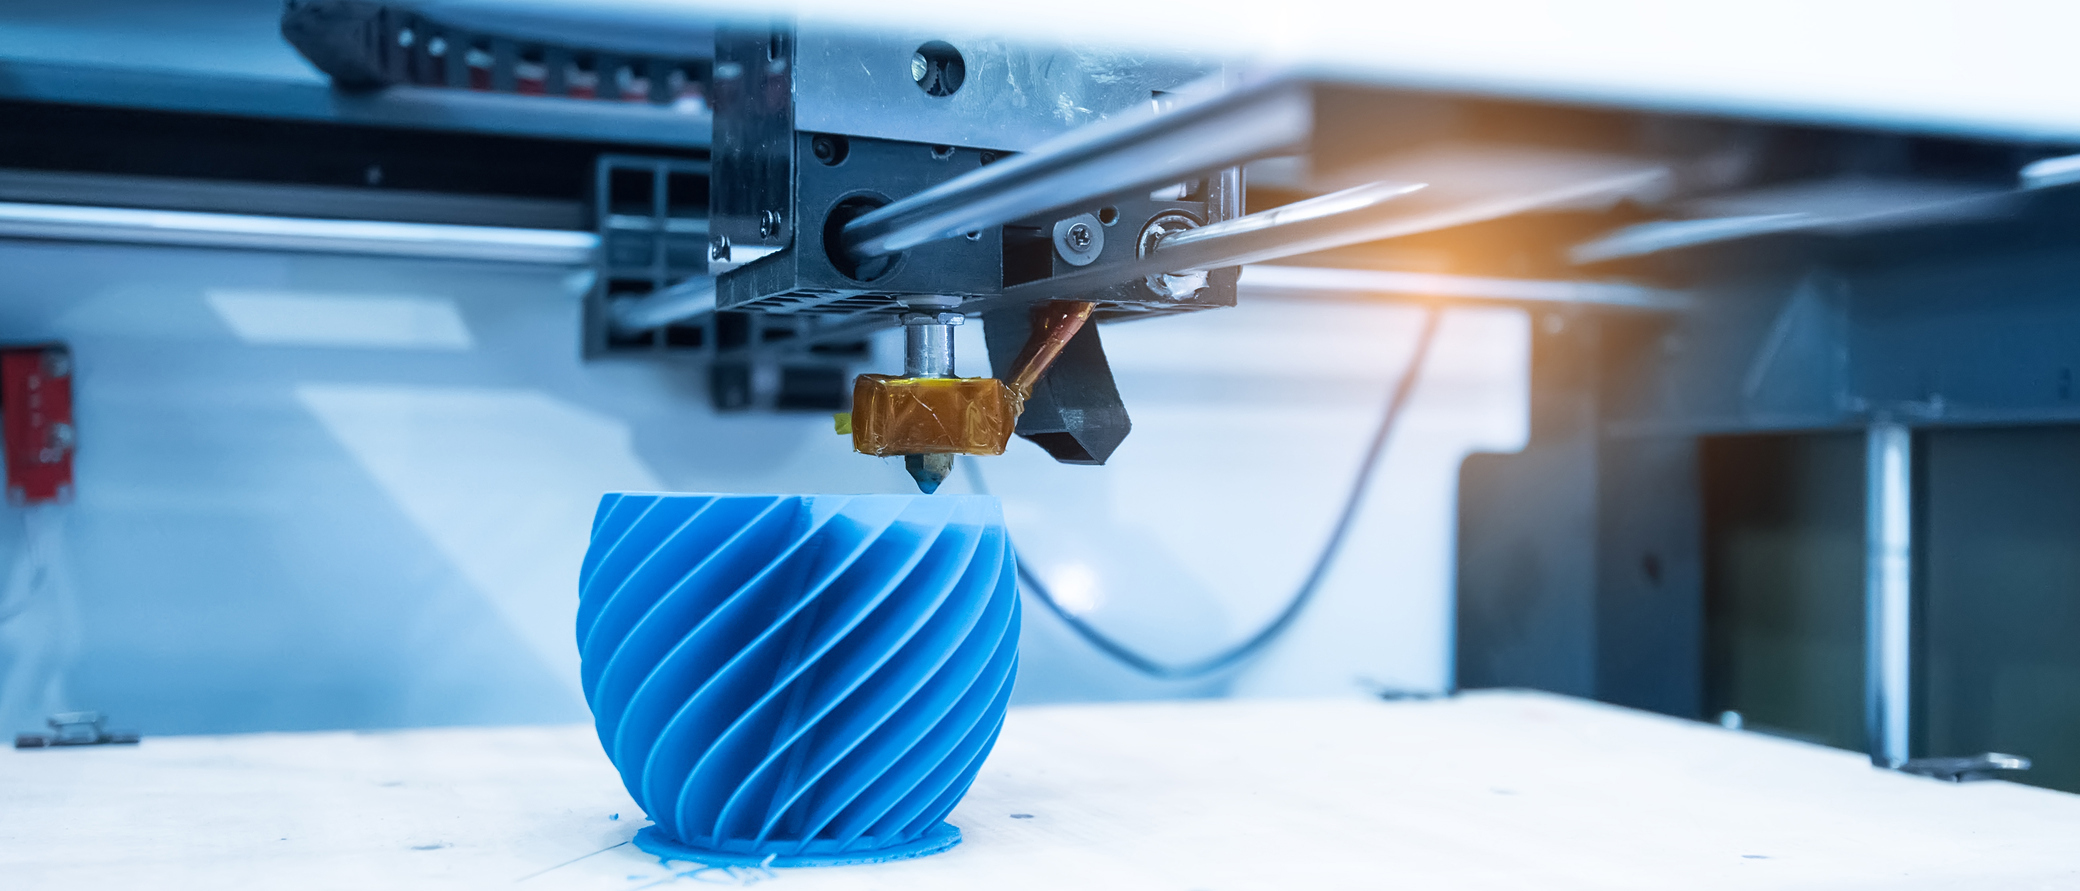 3D printing machine making a plastic device.